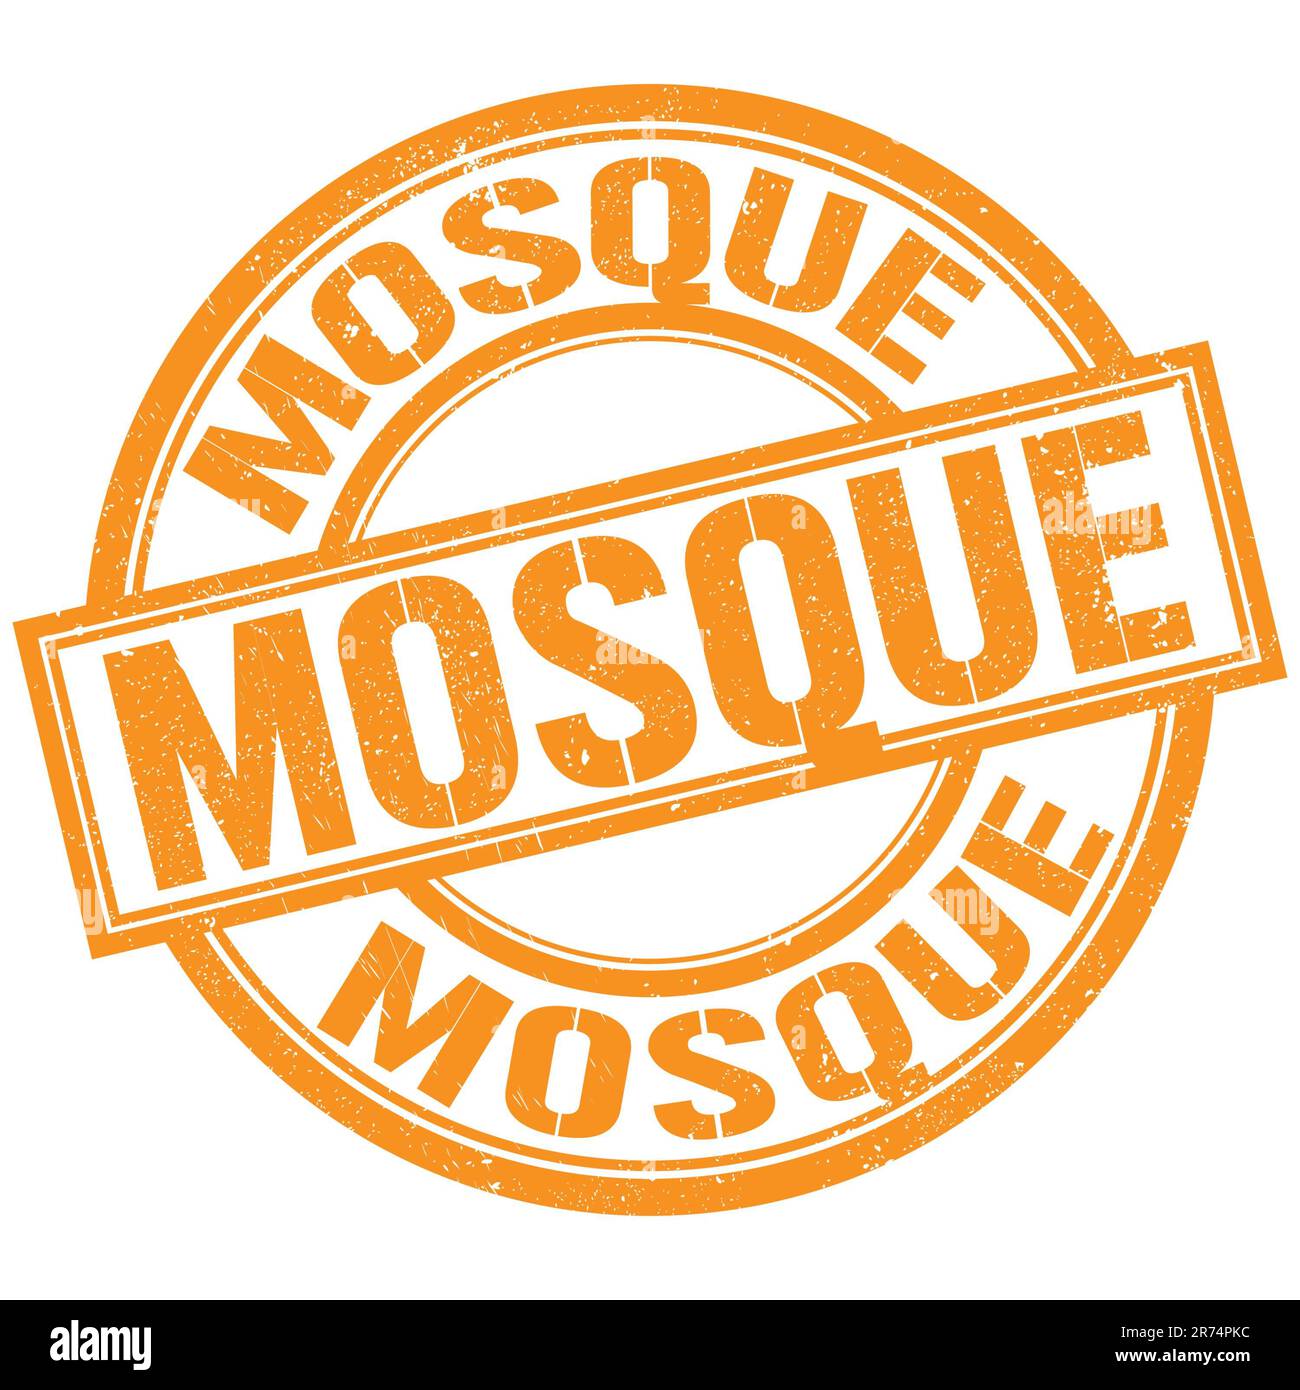 MOSQUE text written on orange round stamp sign Stock Photo